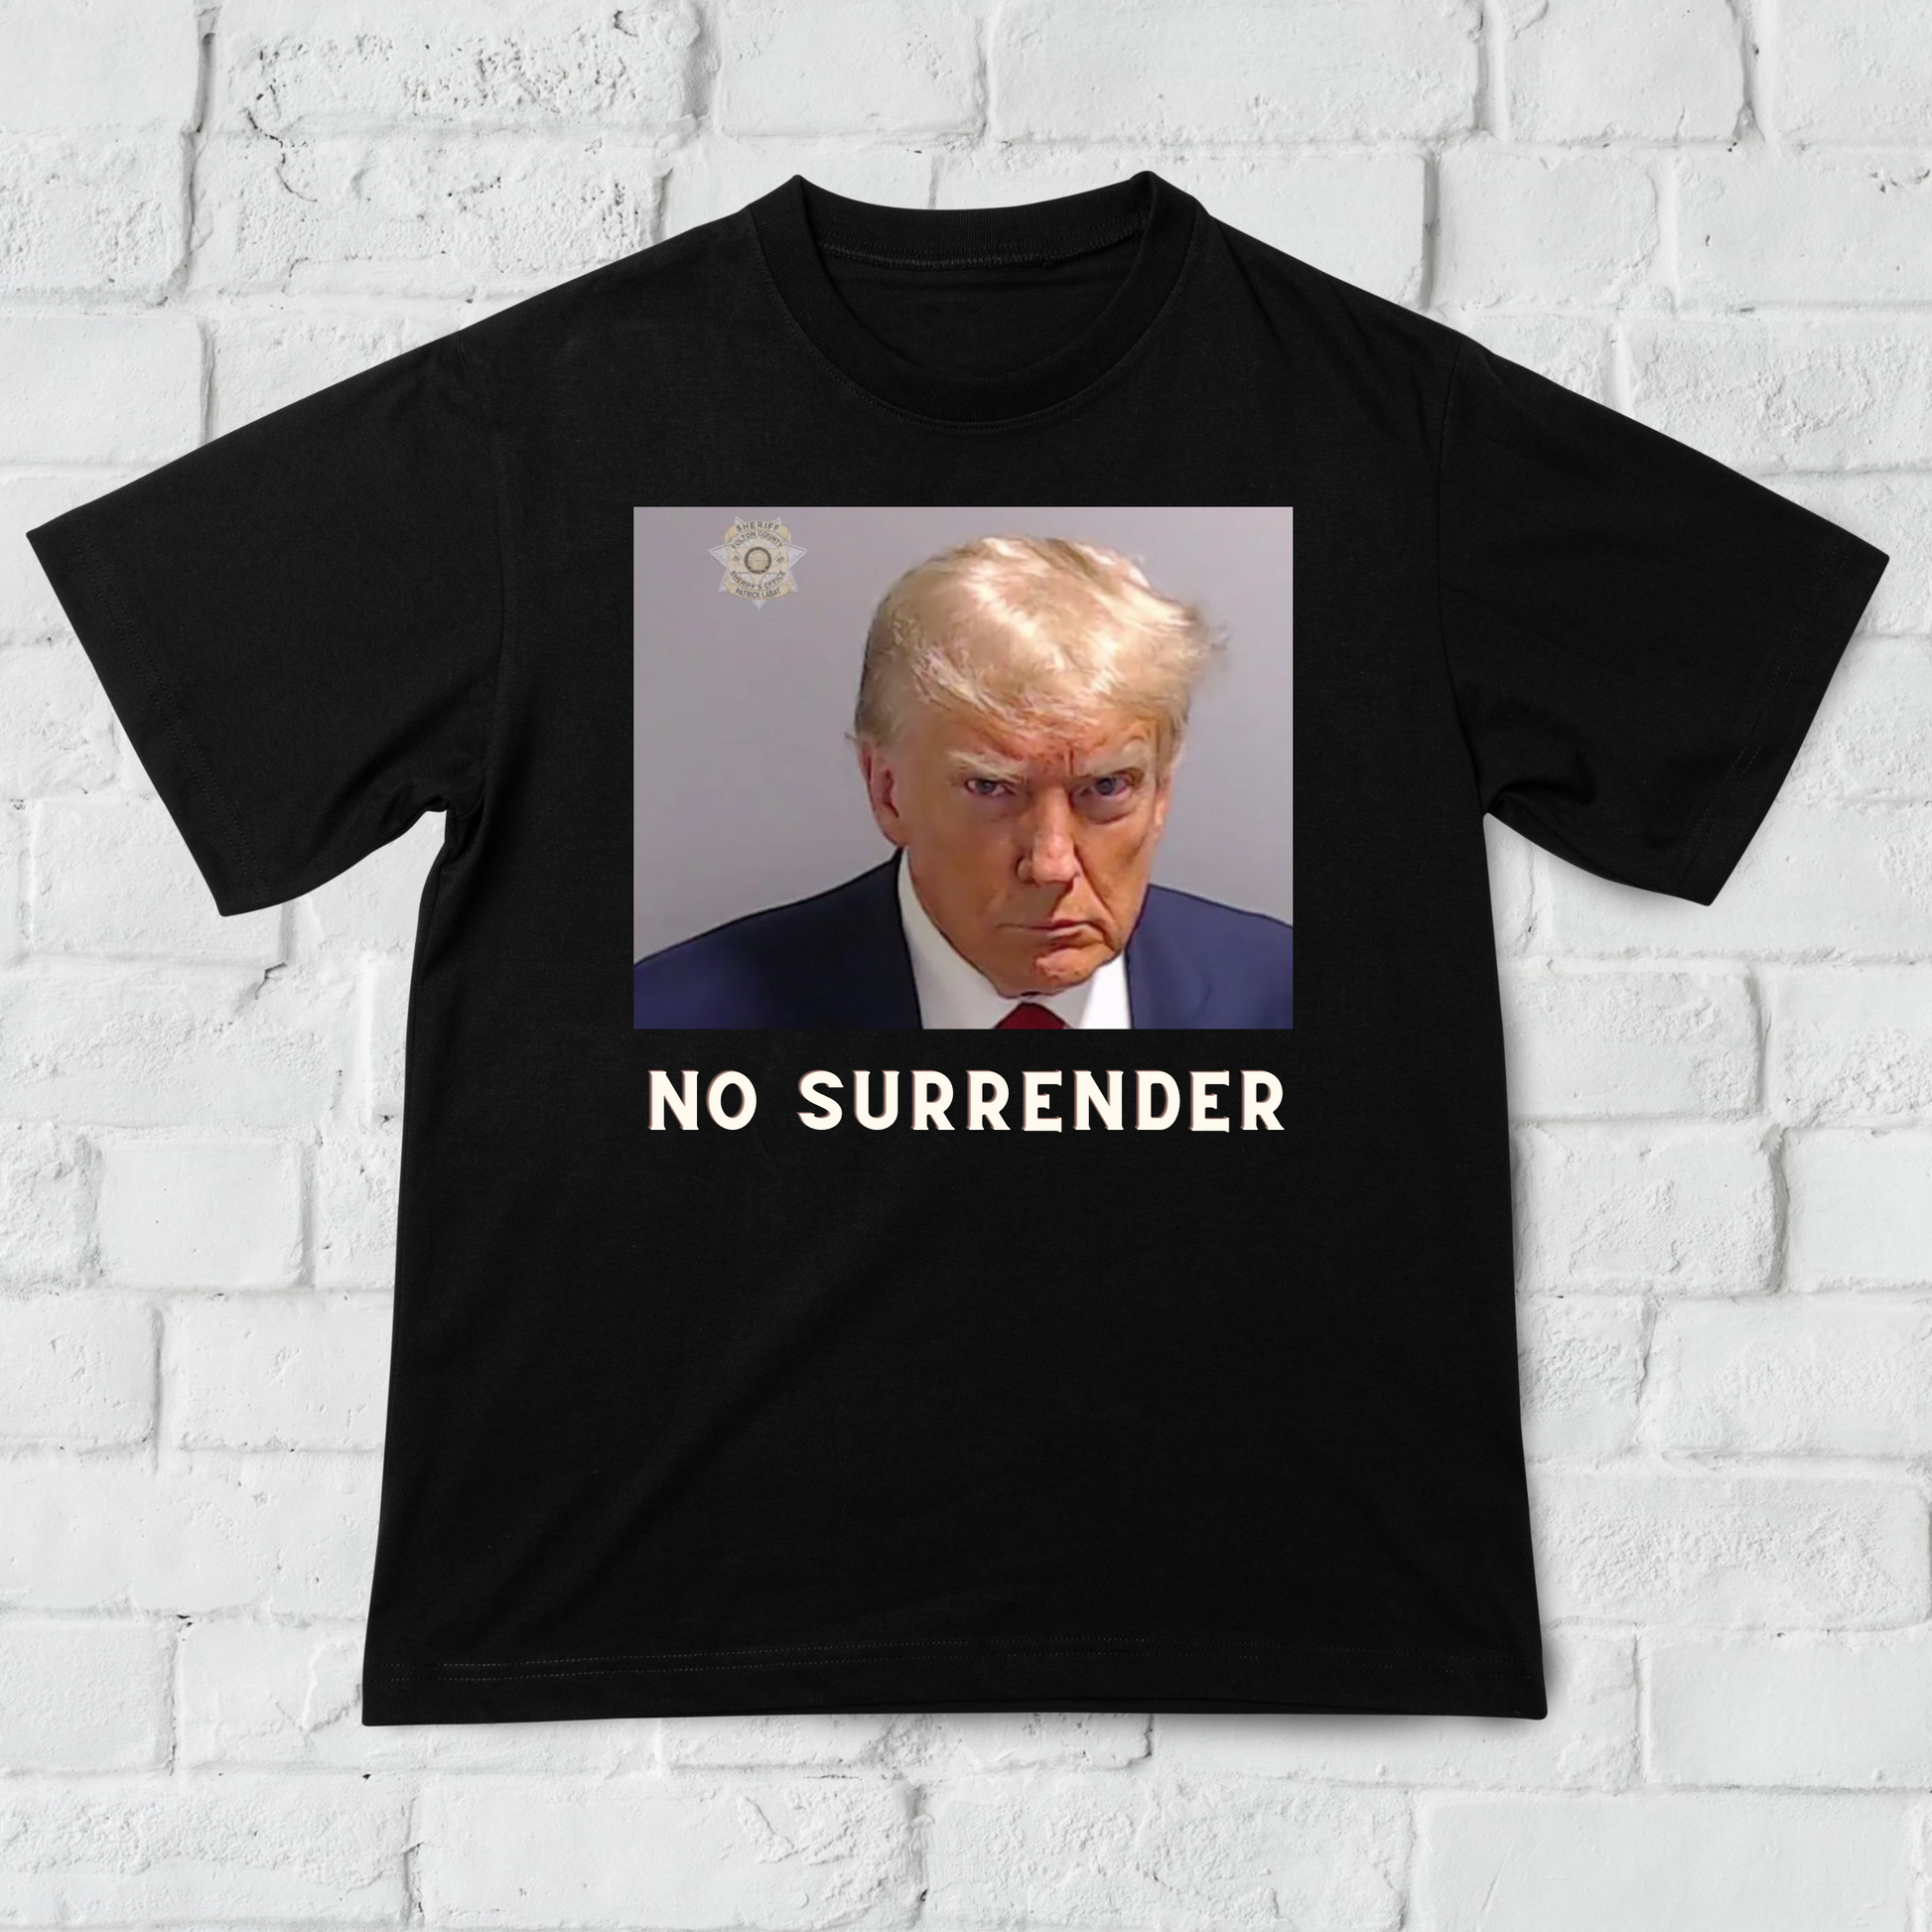 Donald Trump - no surrender mugshot t-shirt - Premium t-shirt from Lees Krazy Teez - Shop now at Lees Krazy Teez